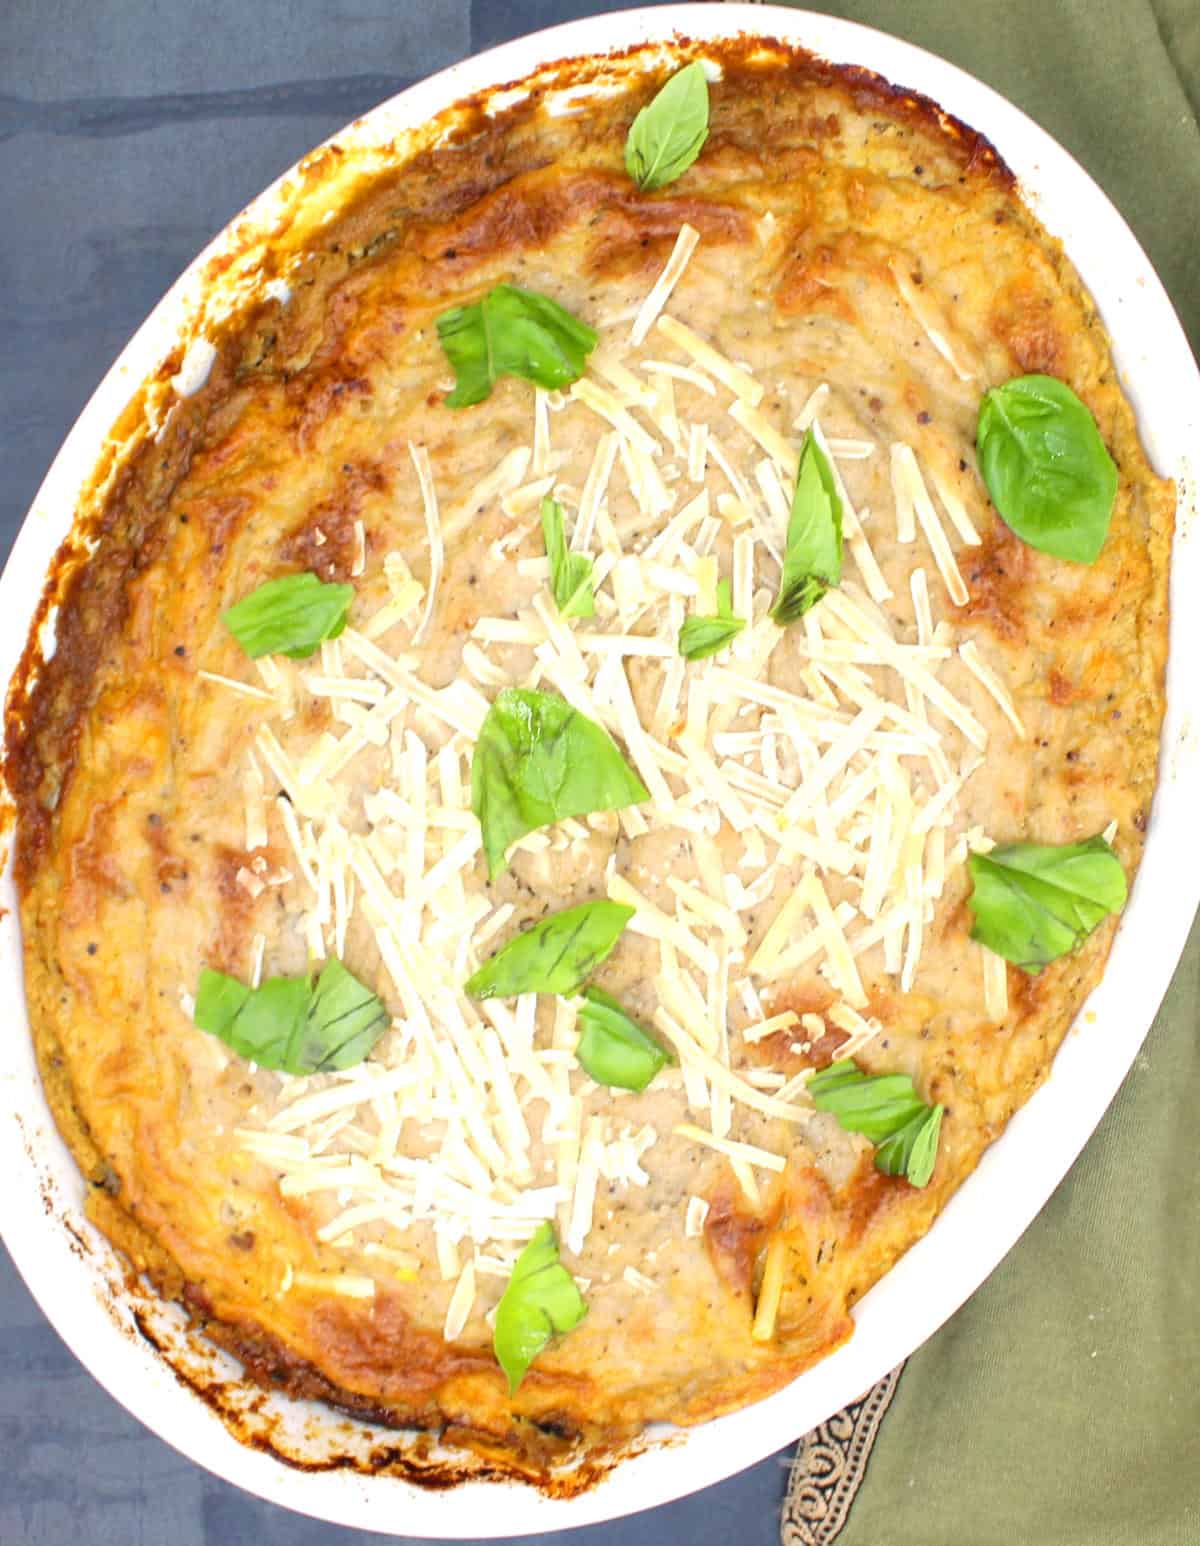 Baked vegan moussaka in oval baking dish with basil garnish.